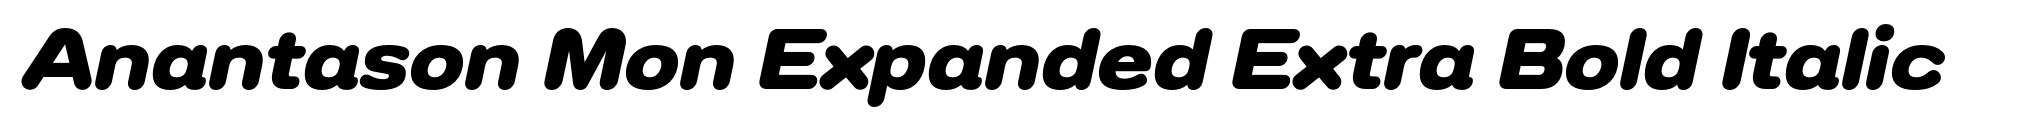 Anantason Mon Expanded Extra Bold Italic image